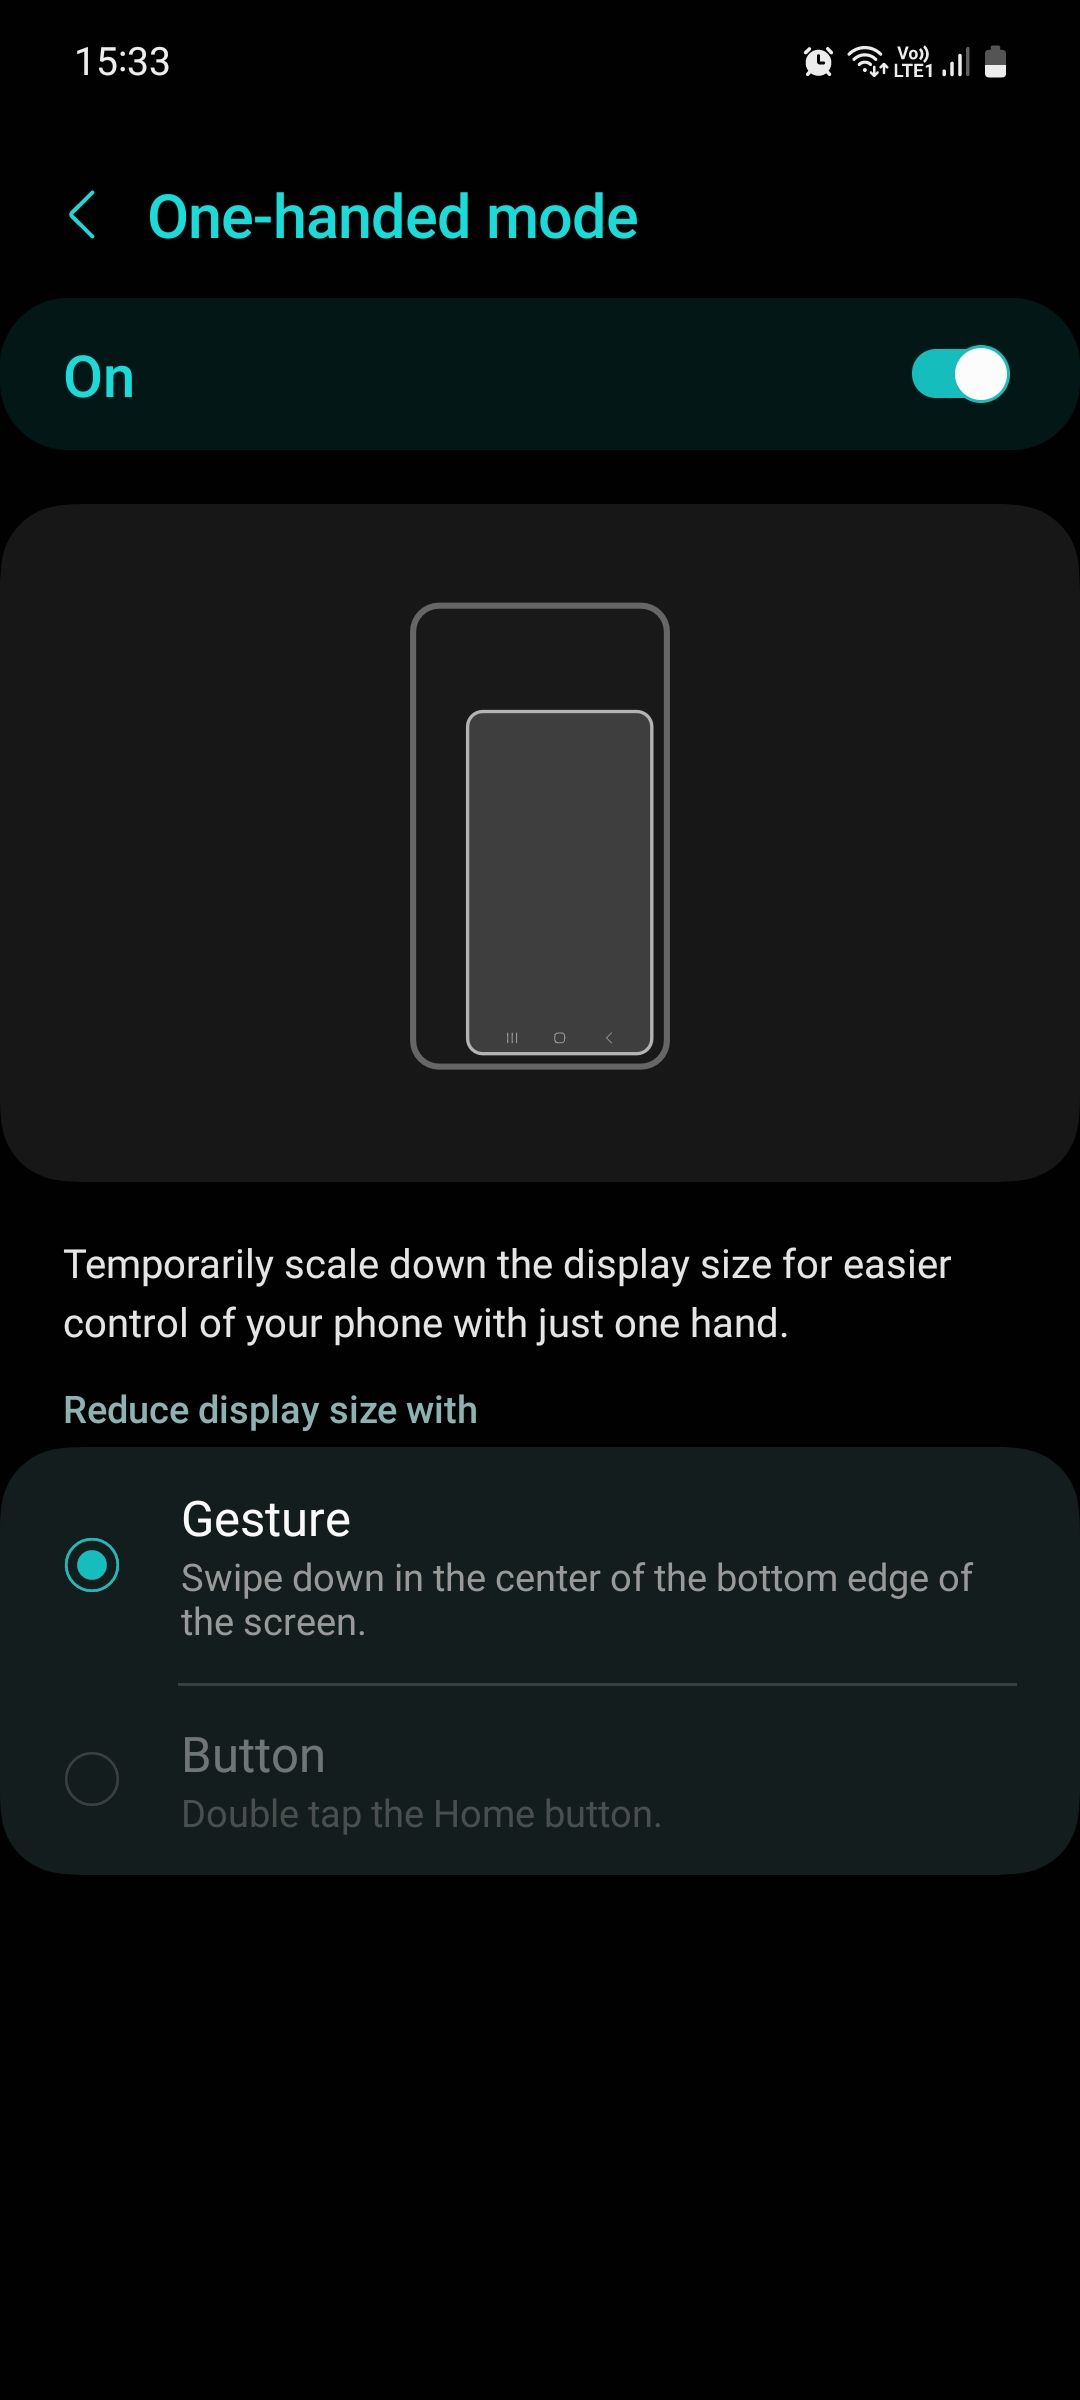 Samsung One-handed mode menu